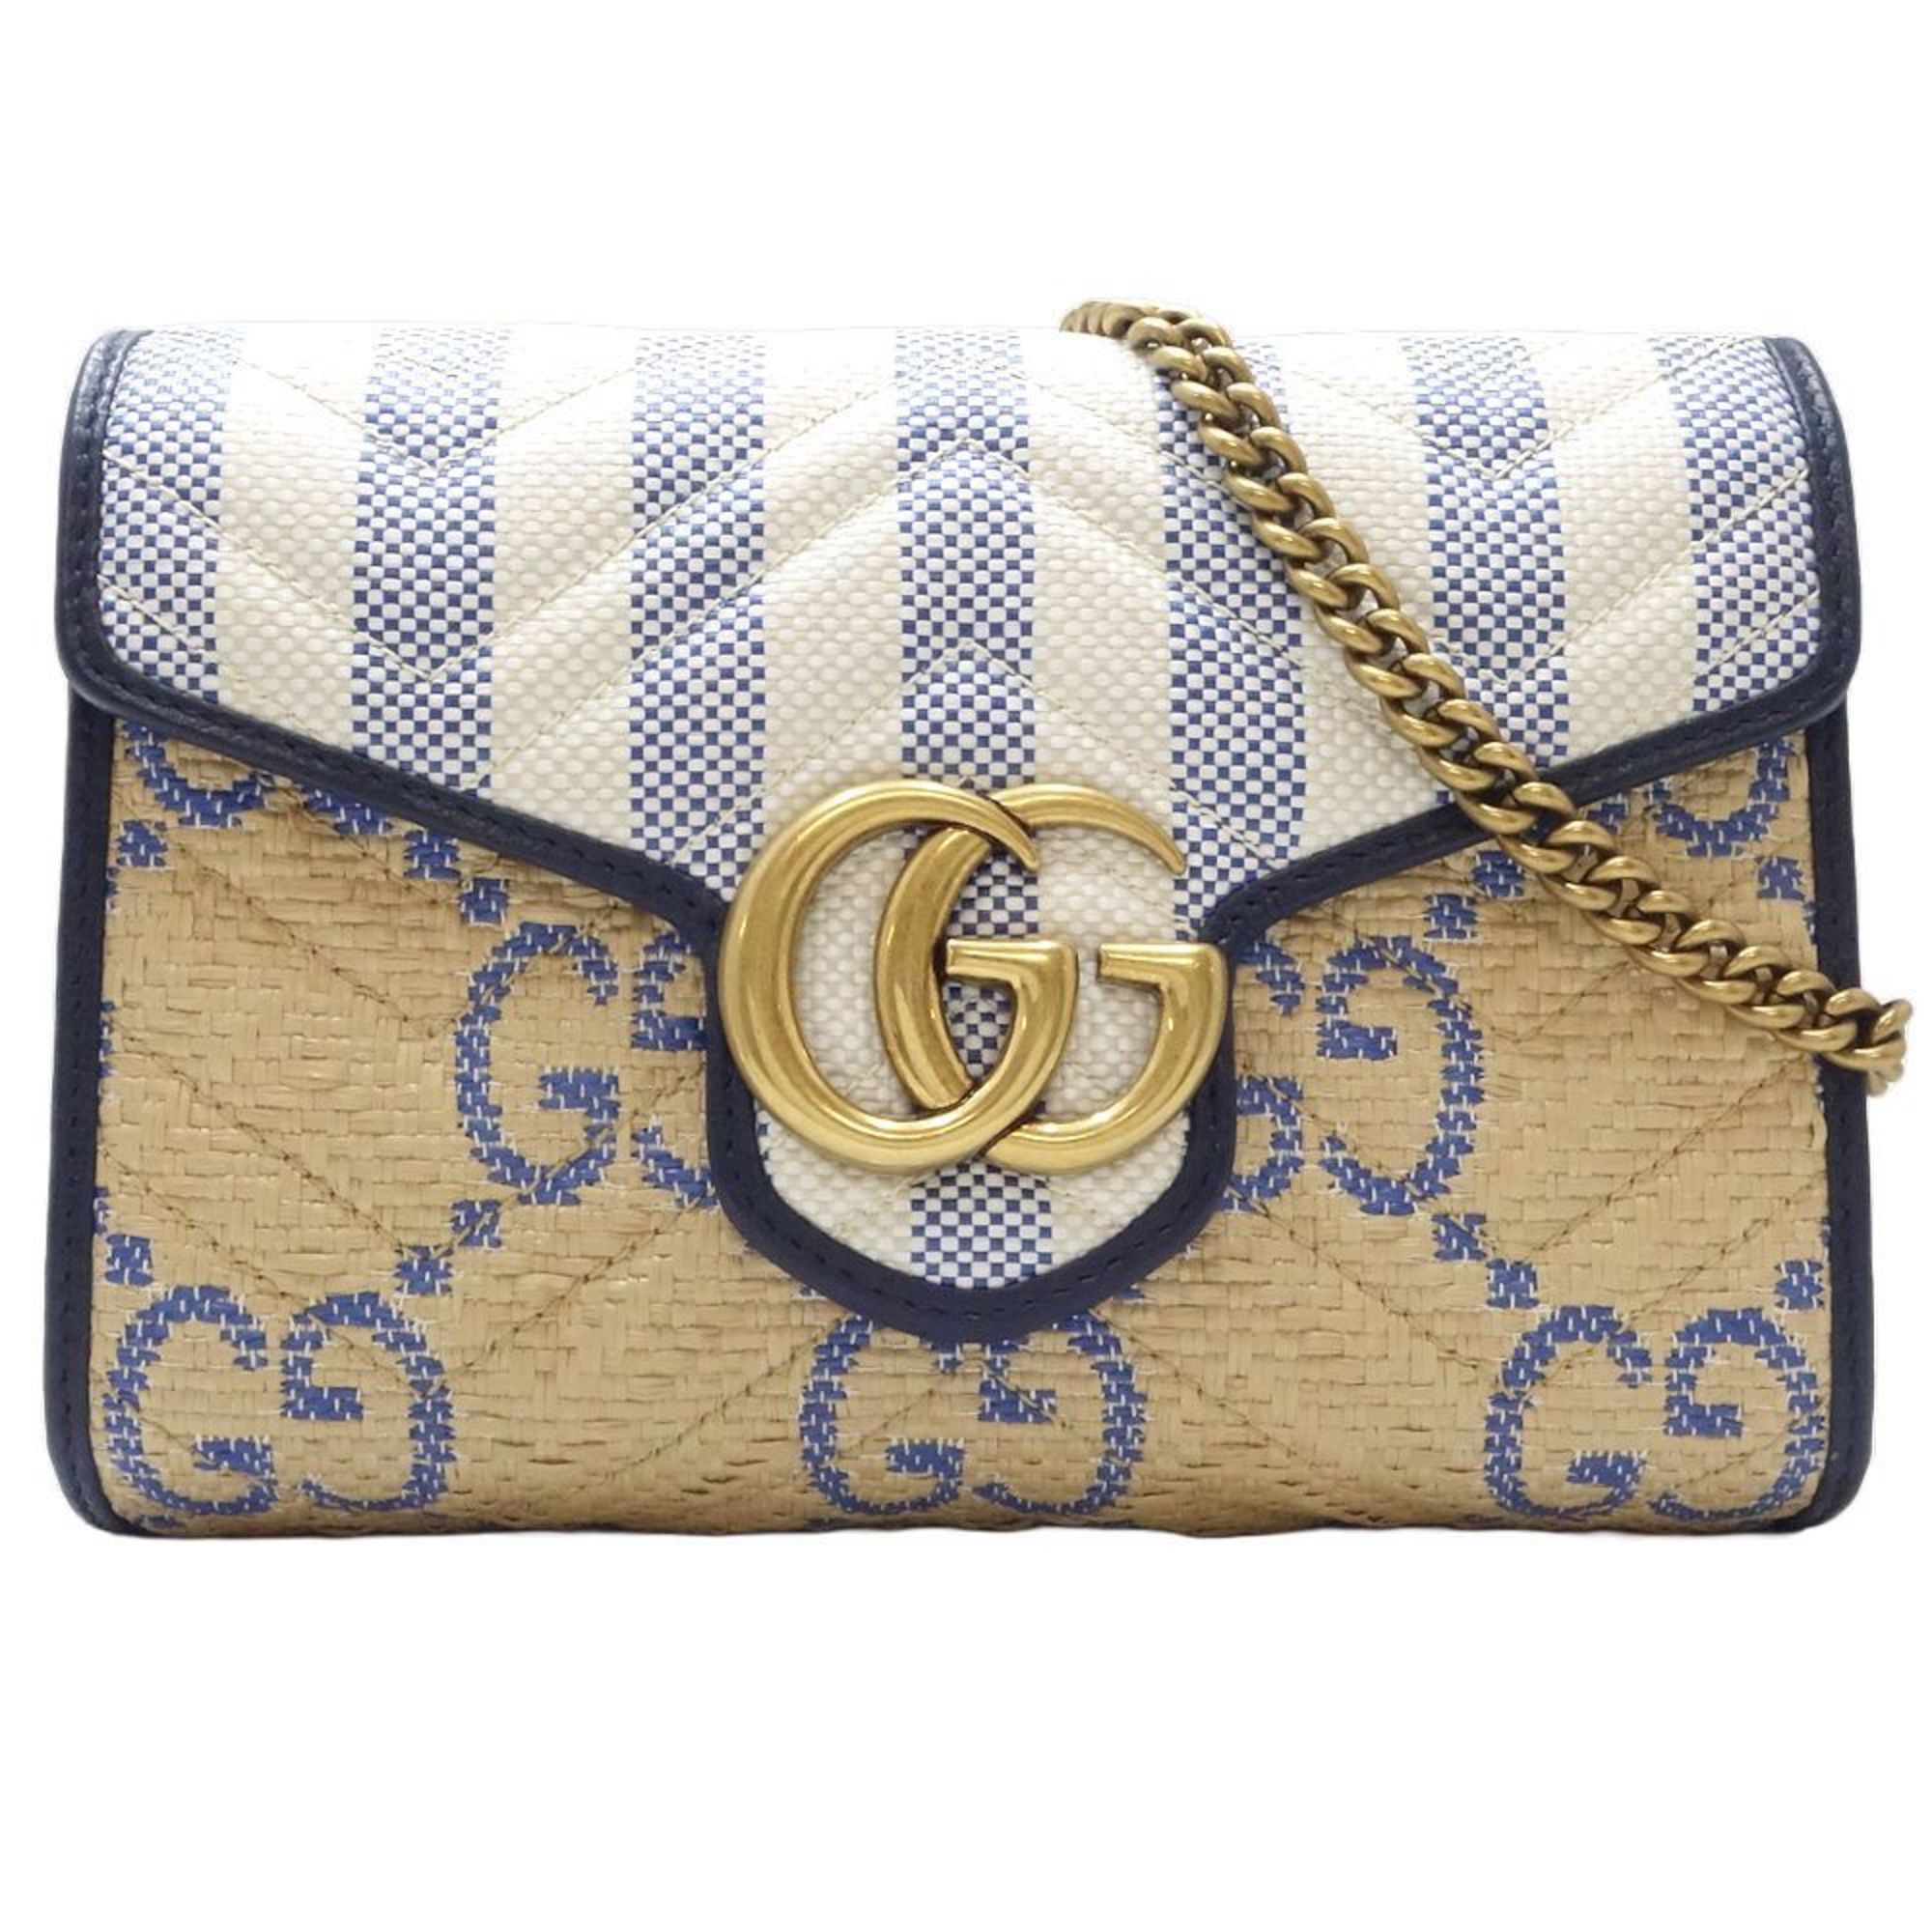 GUCCI Gucci GG Marmont Chain Shoulder 474575 Wallet Raffia x Leather Light Blue Beige White 083845